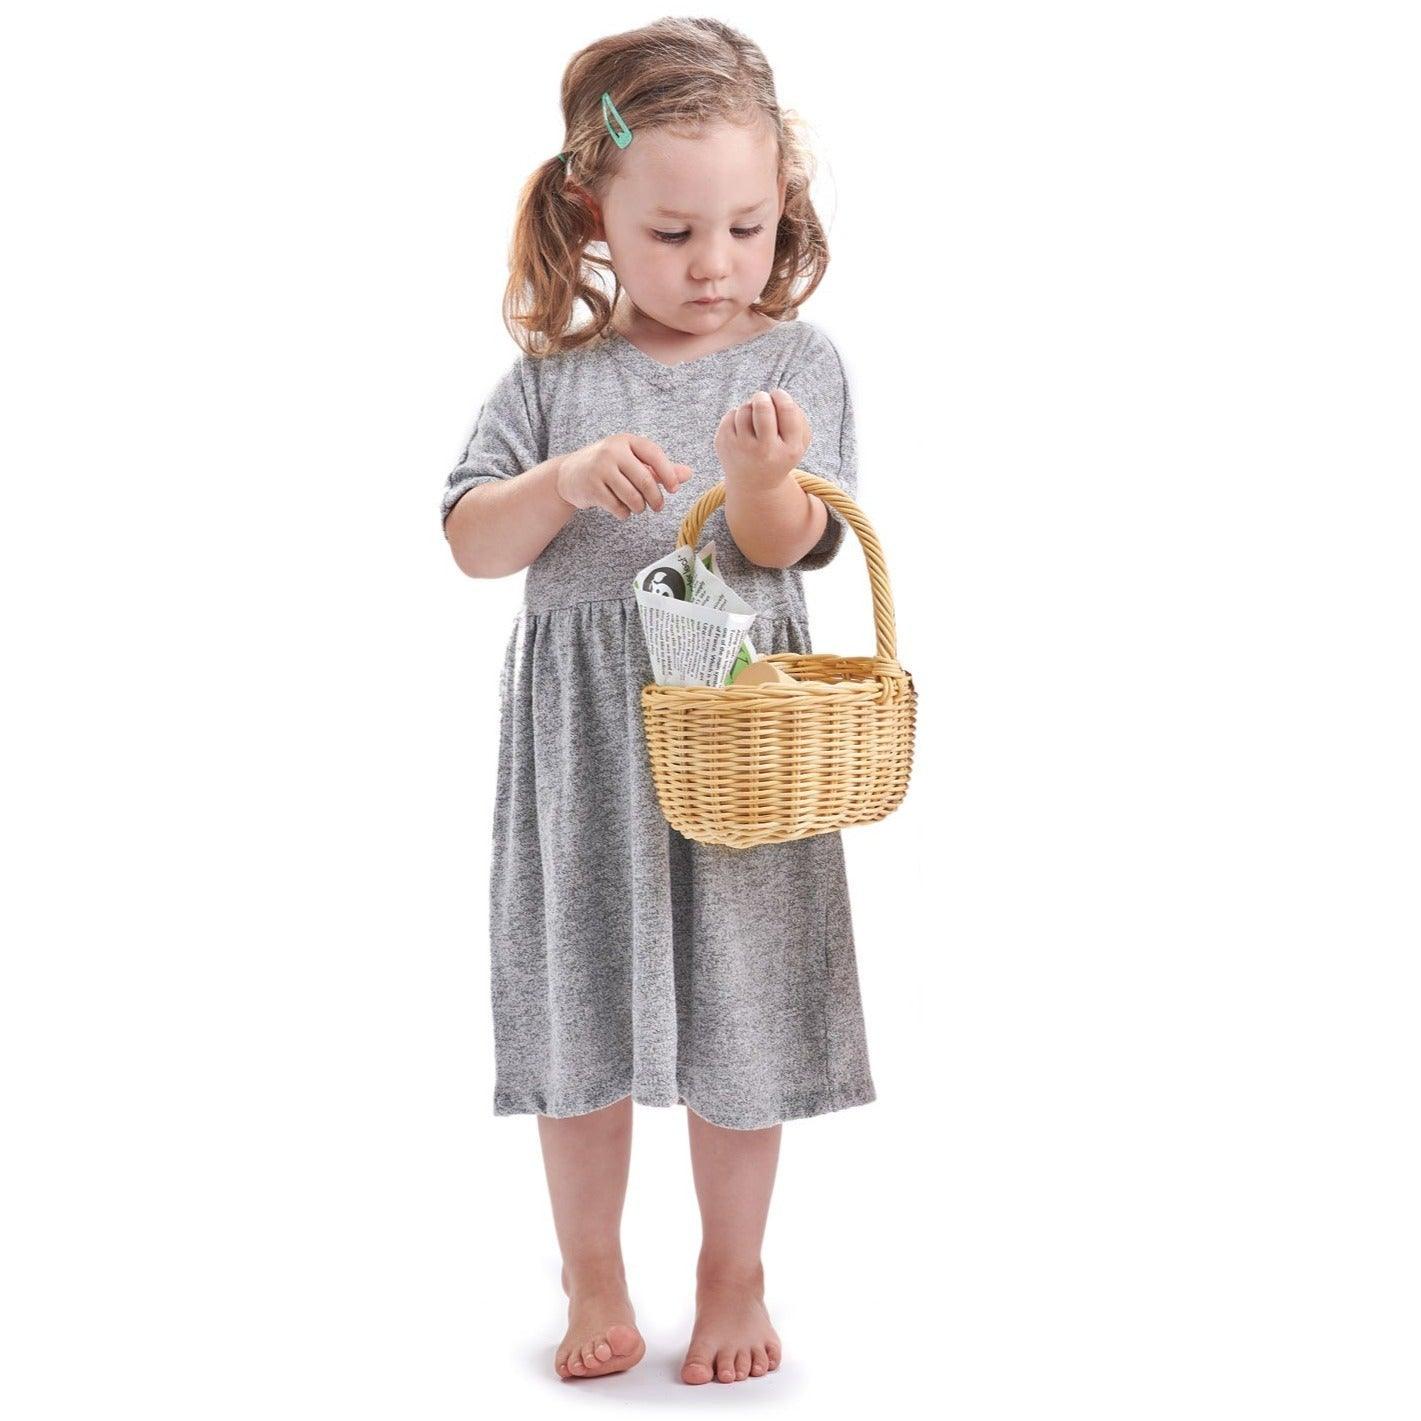 Tender Leaf Toys: wiklinowy koszyk z zakupami Shopping Basket - Noski Noski